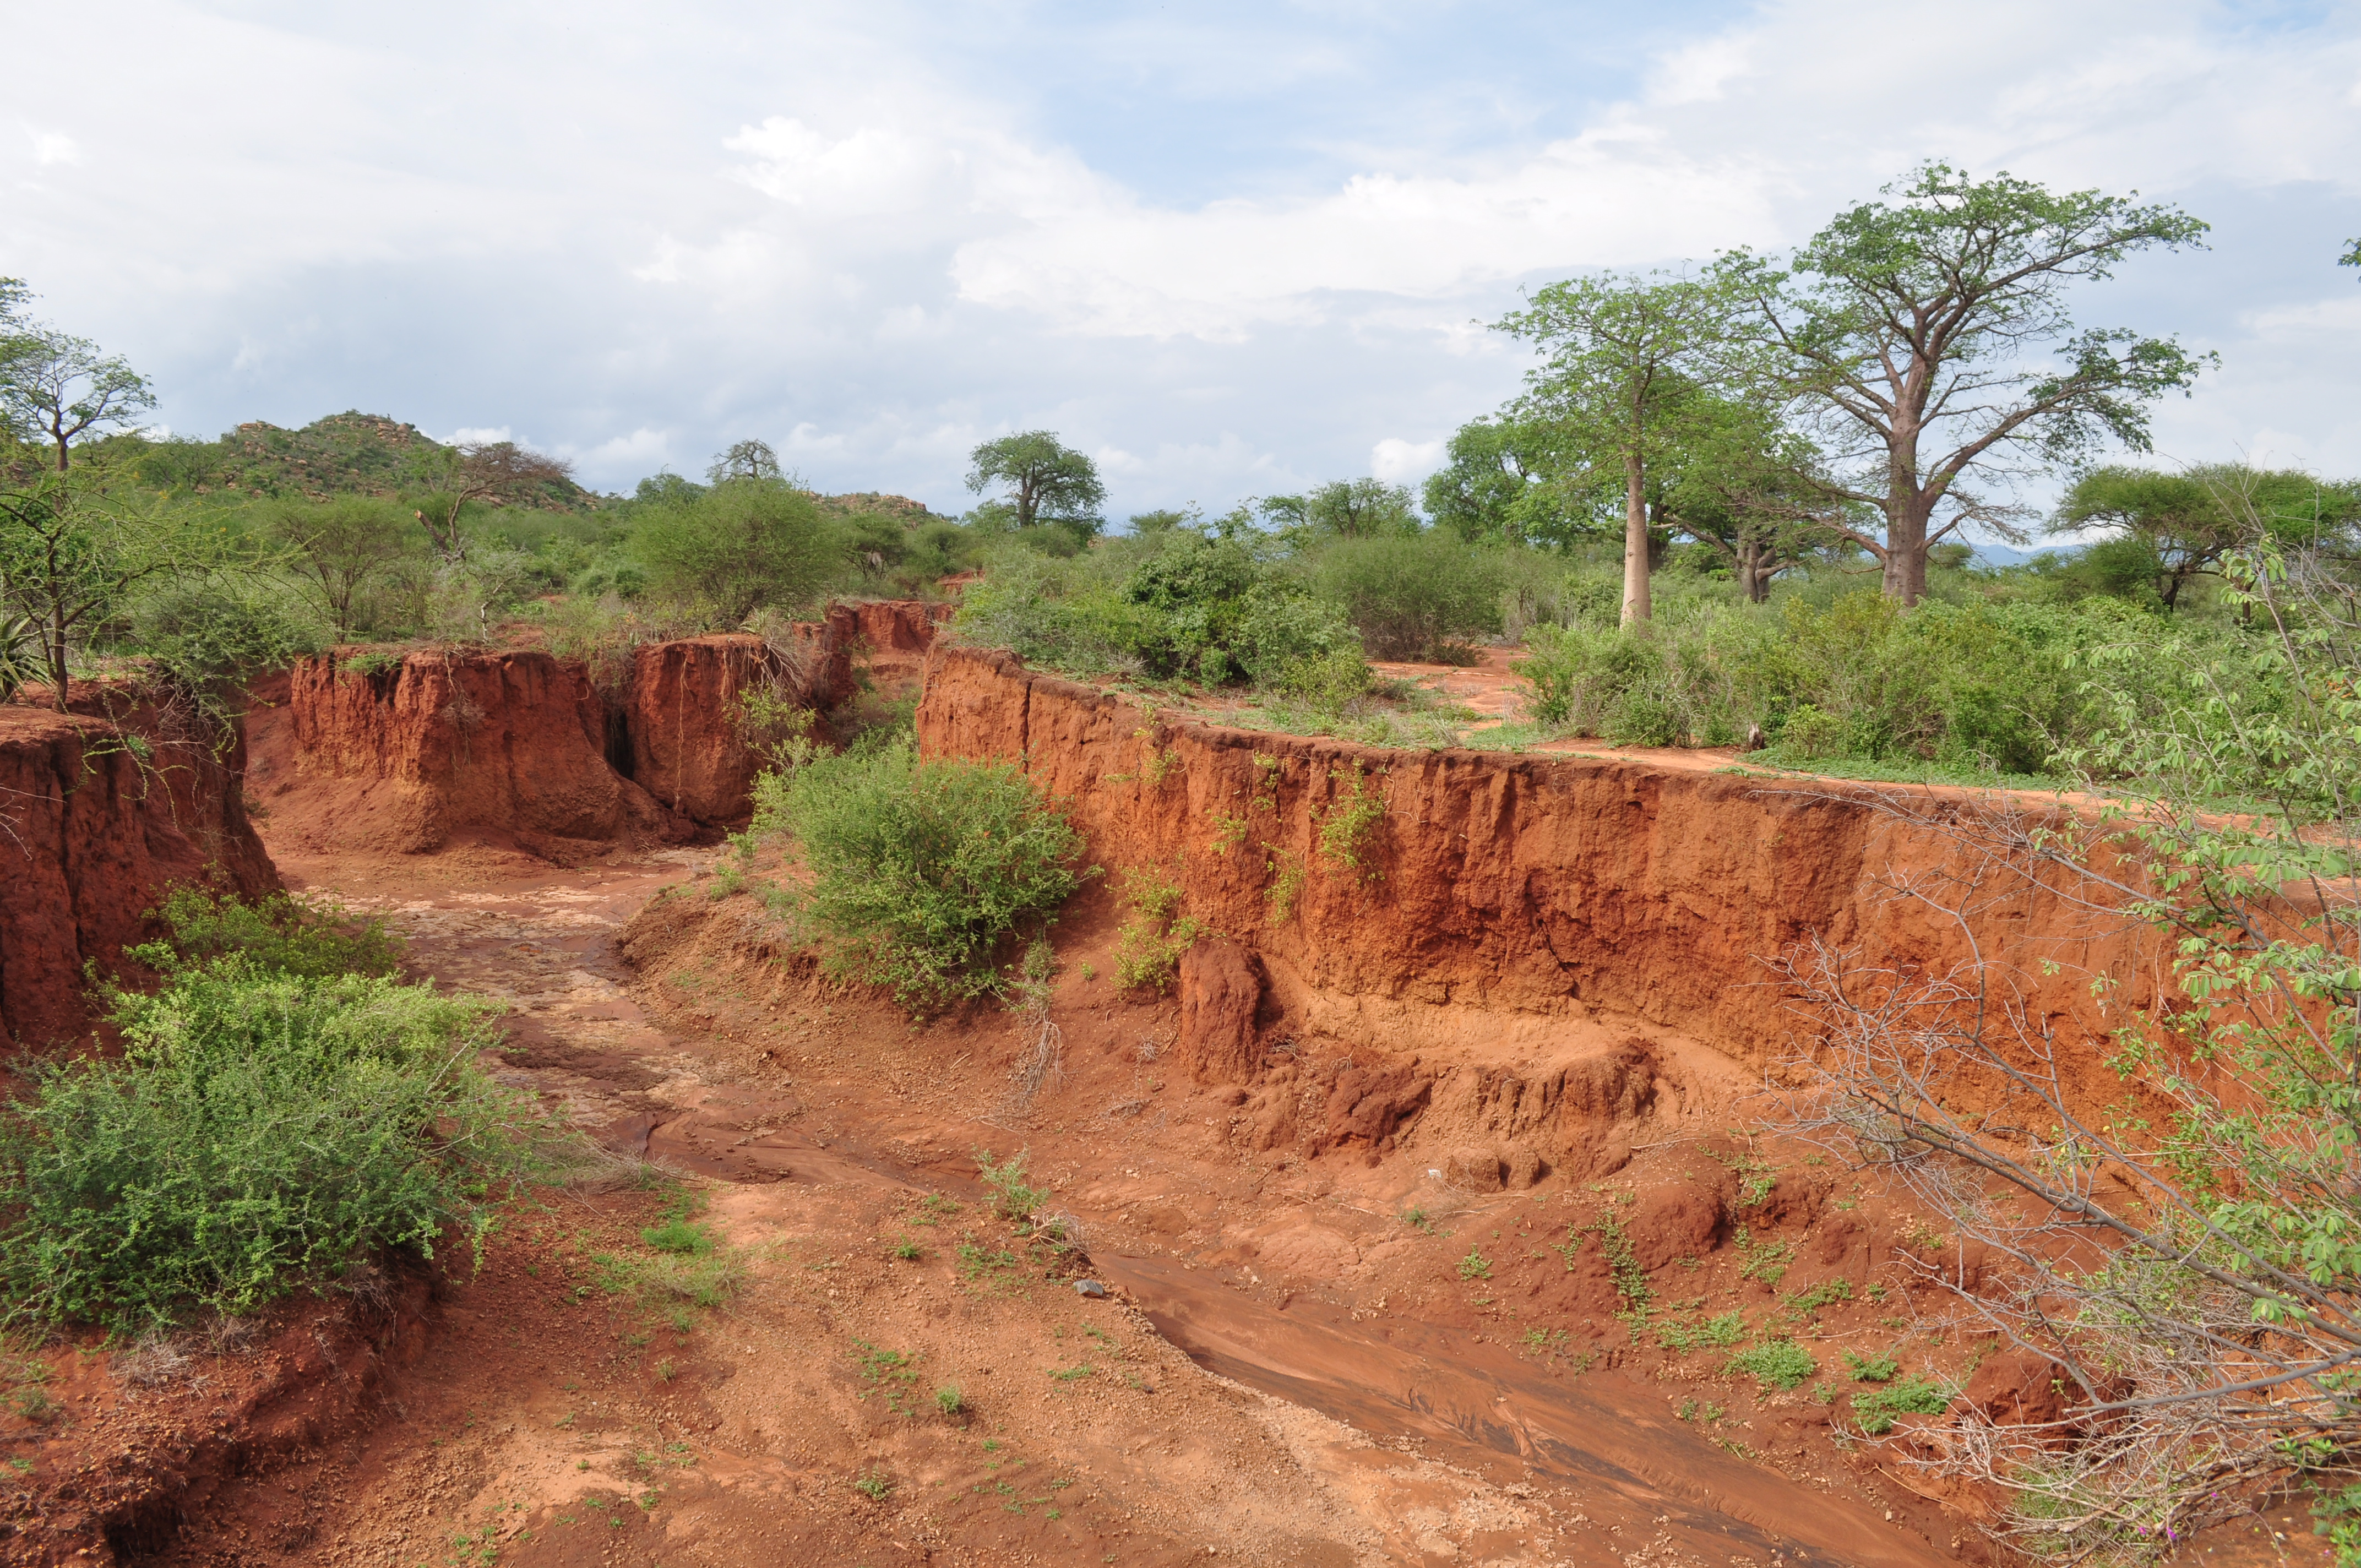 Image: Erosion gully in Northern Tanzania